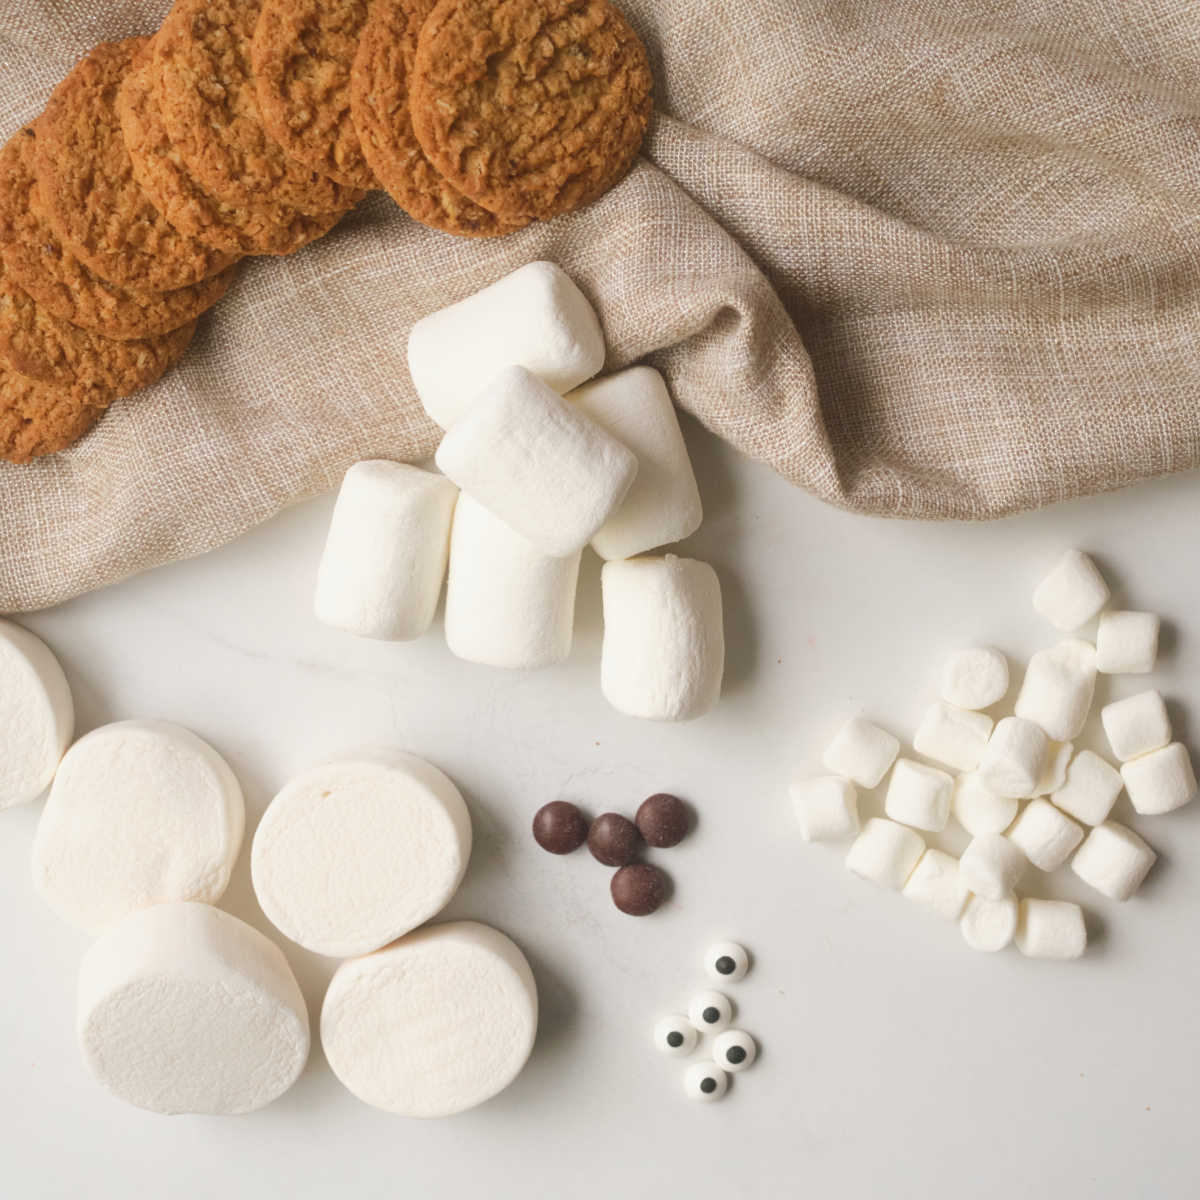 ingredients for polar bear cookies